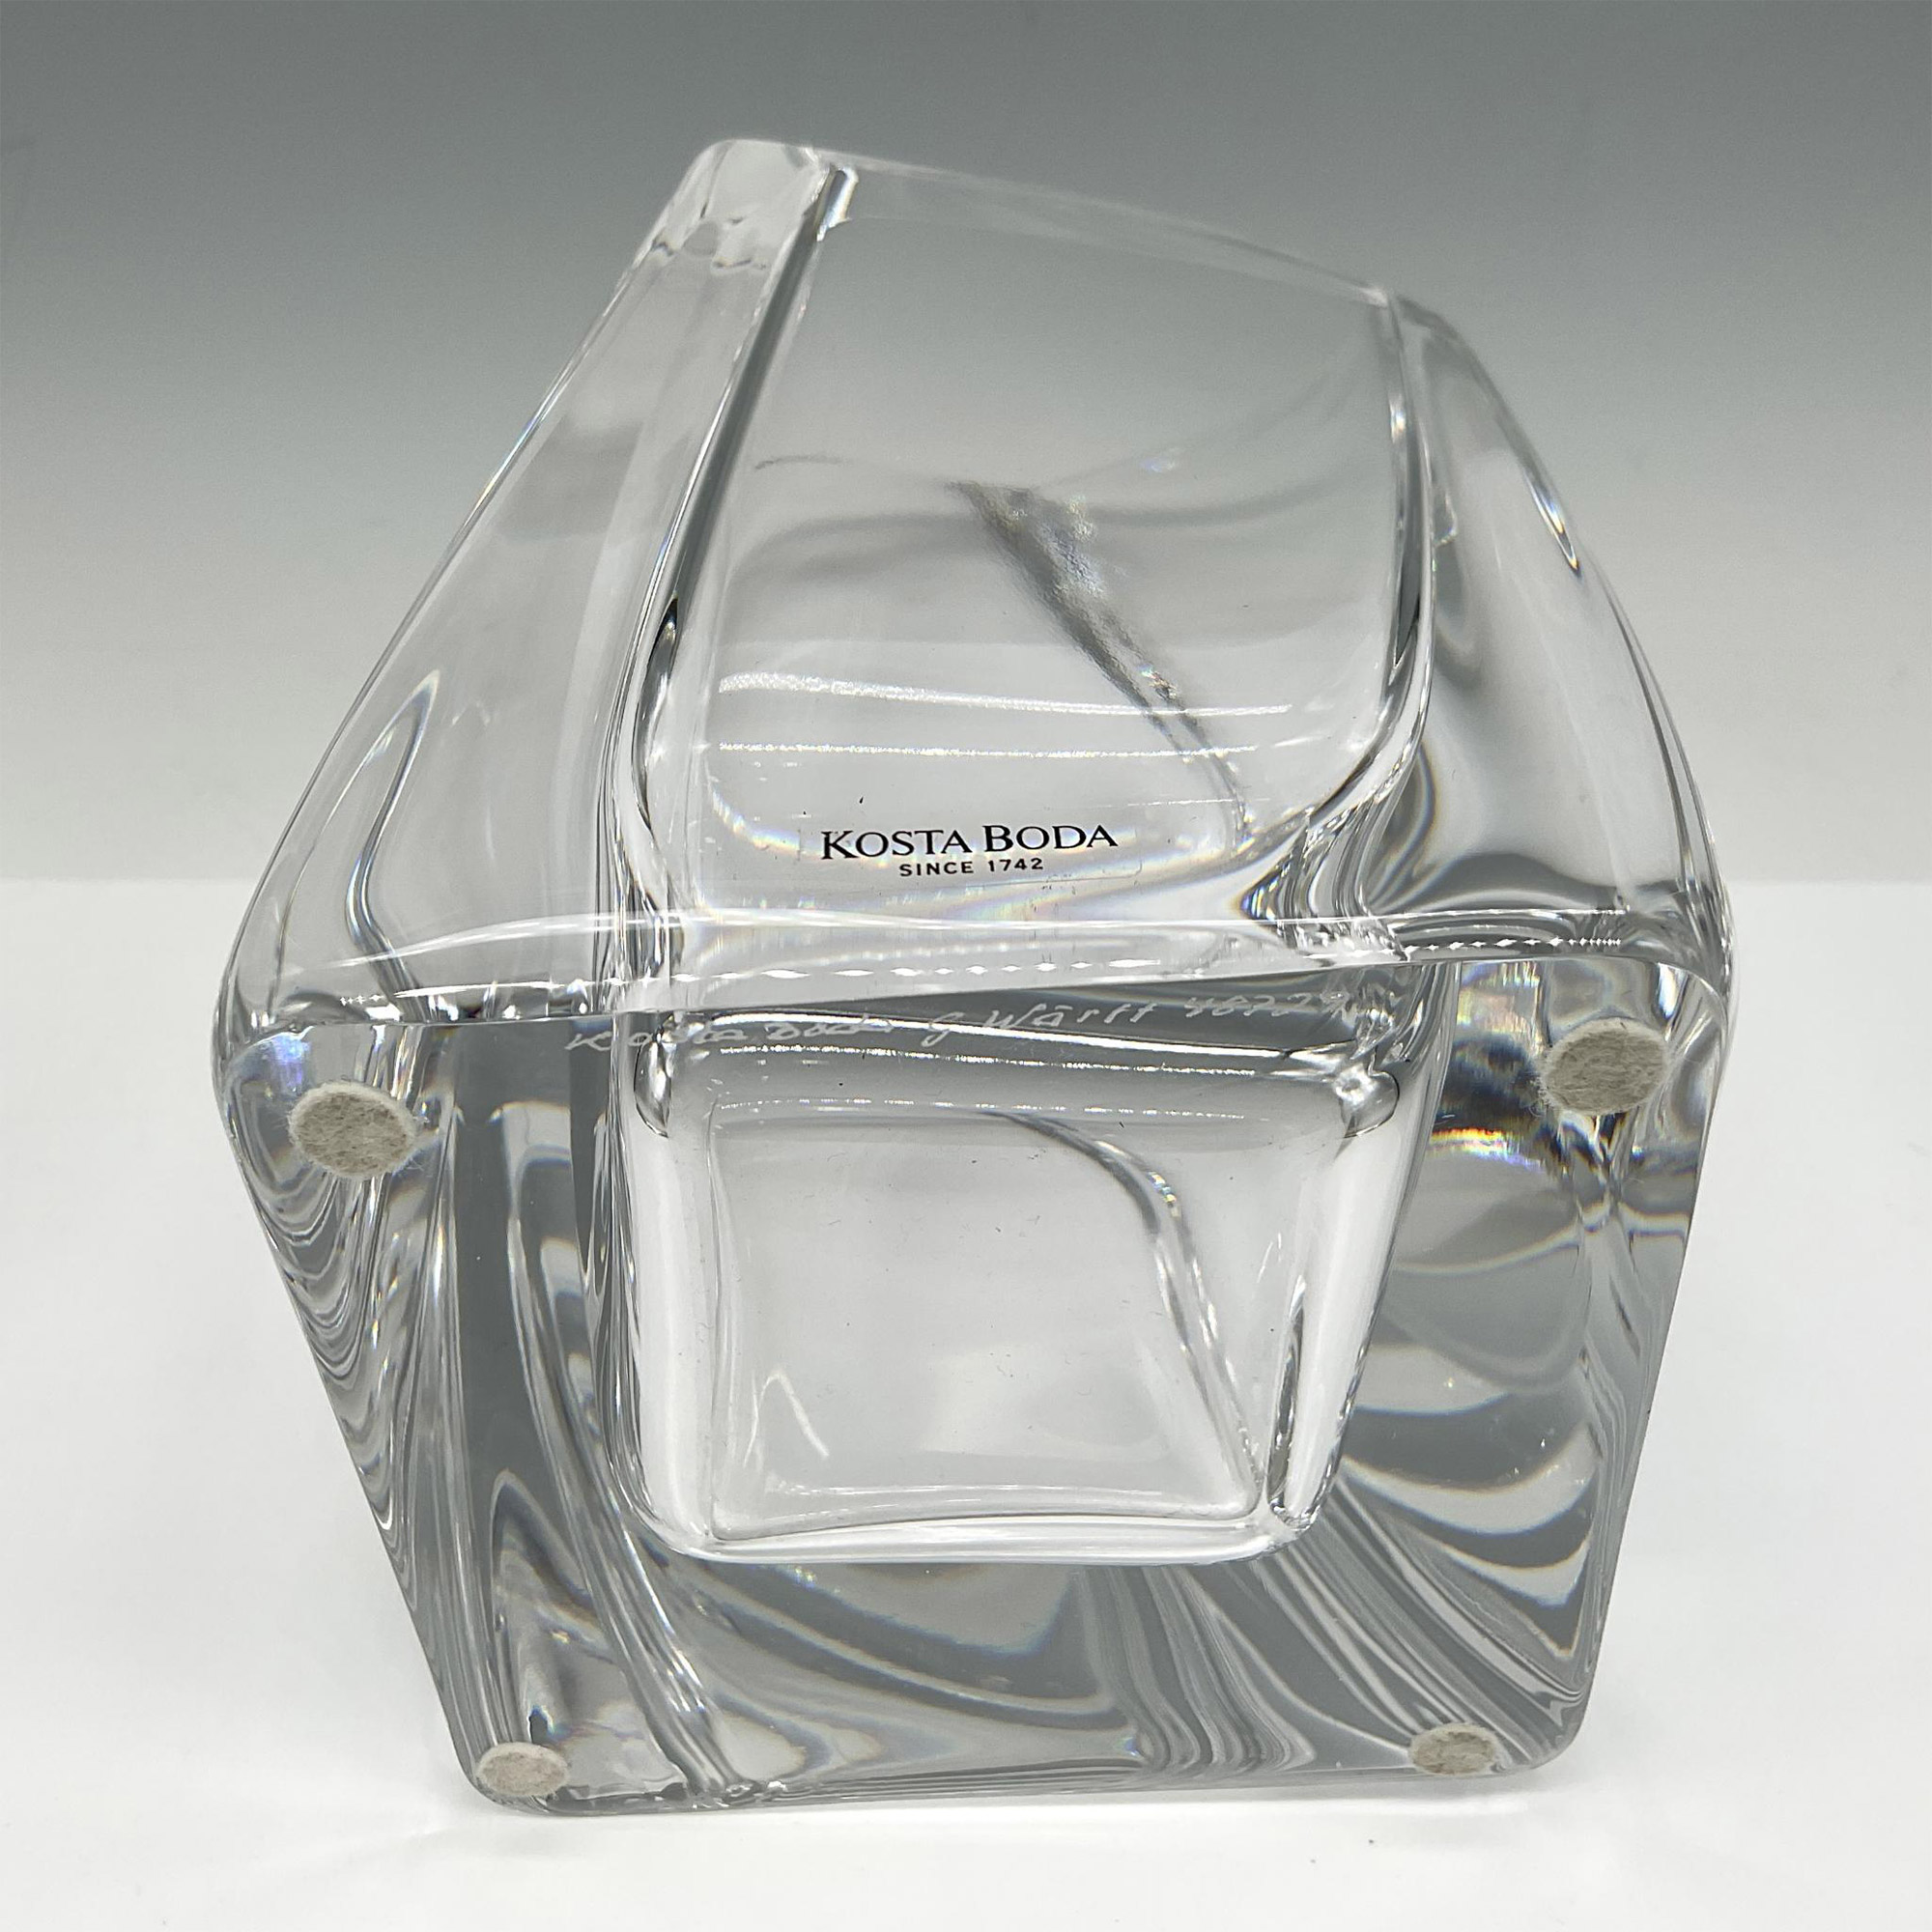 Goran Warff for Kosta Boda Crystal Vase - Image 4 of 4